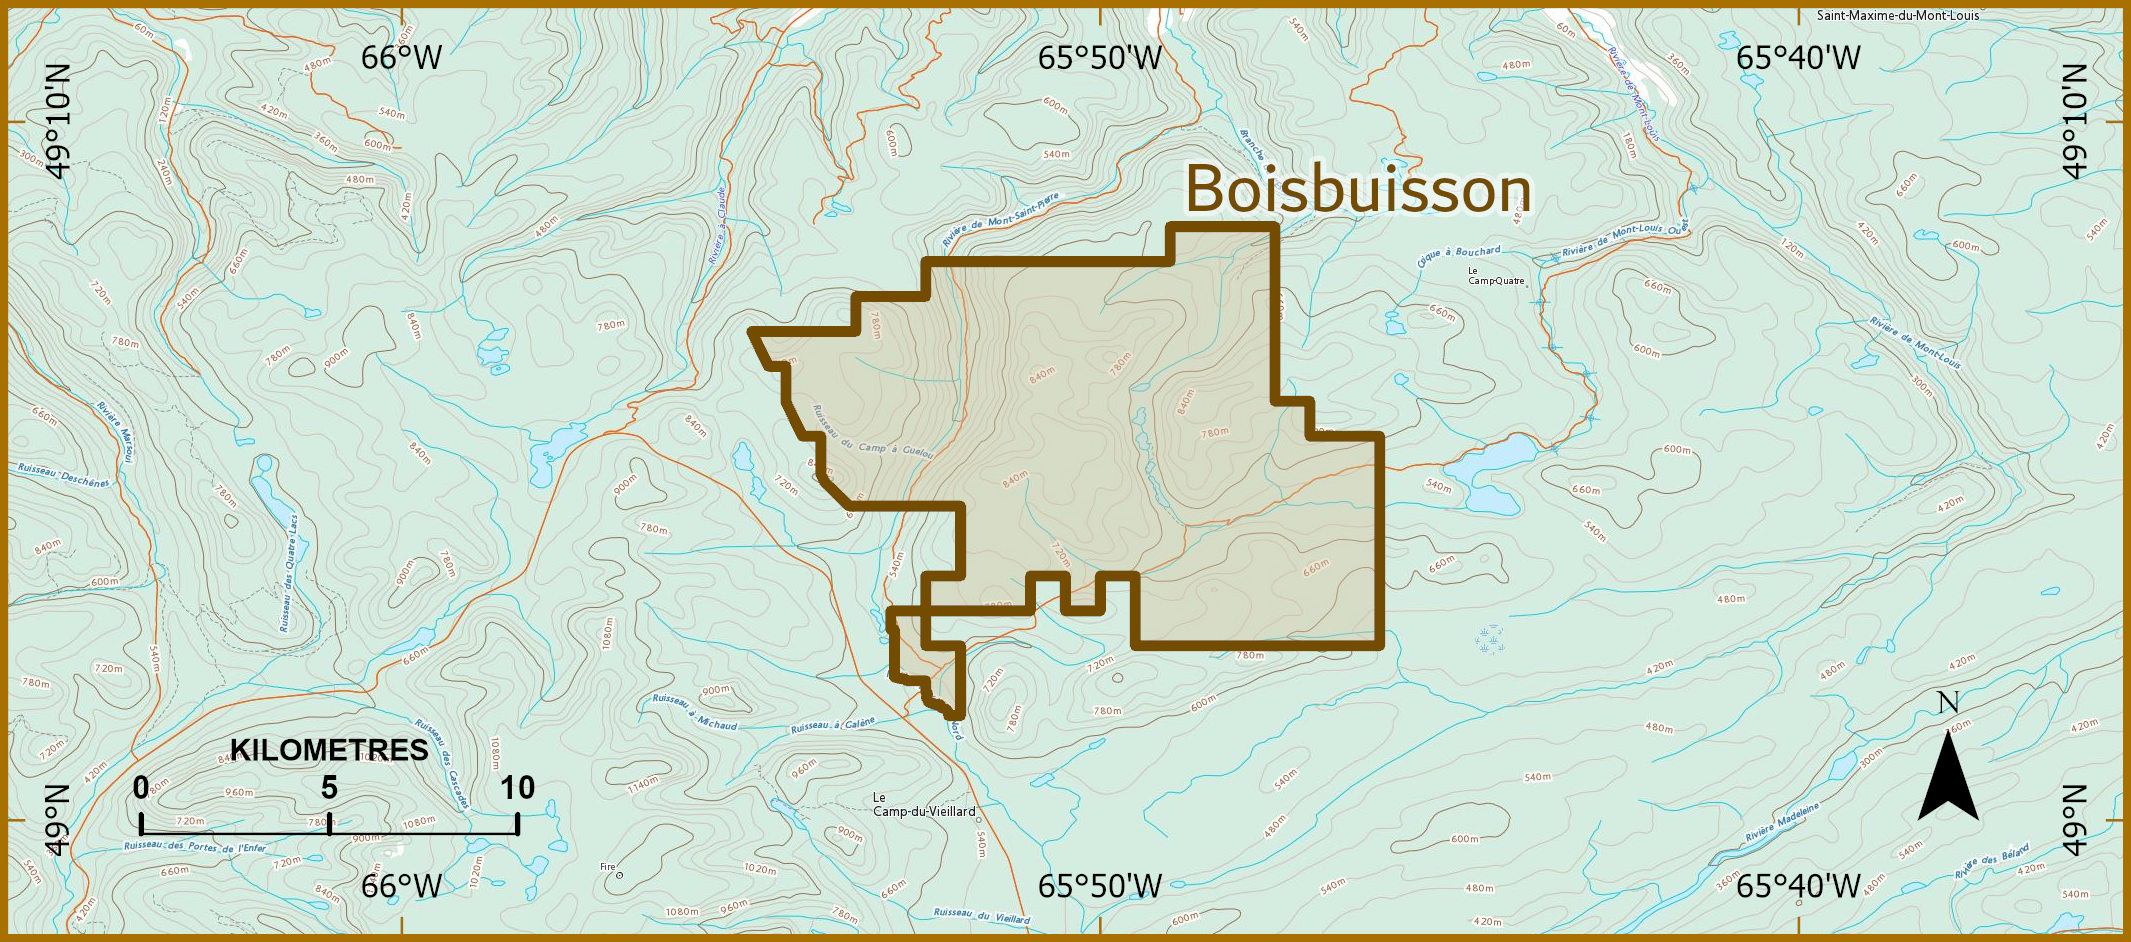 Detailed Map showing Project Boisbuisson